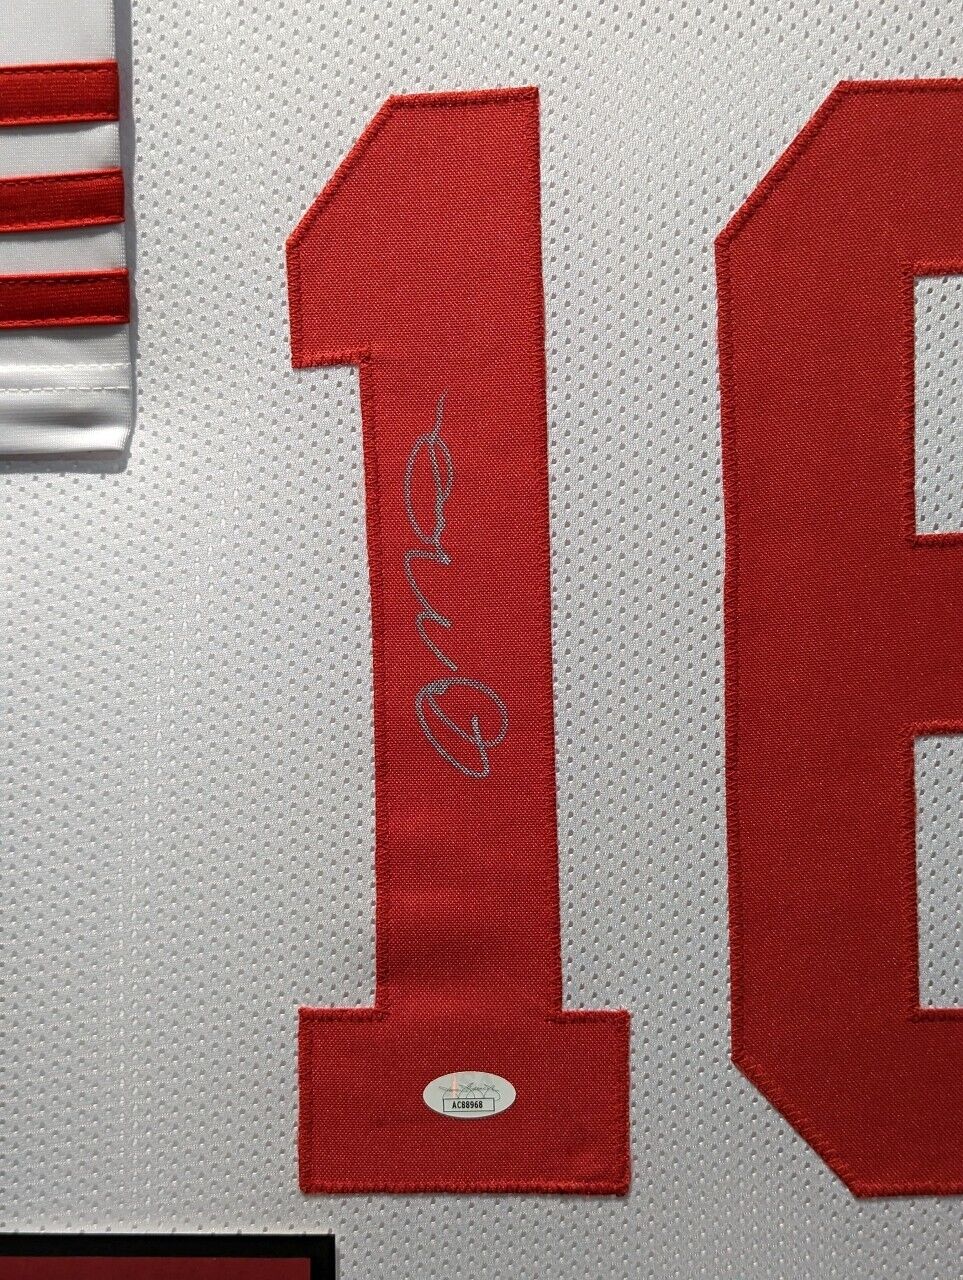 MVP Authentics Framed San Francisco 49Ers Joe Montana Autographed Signed Jersey Jsa Coa 630 sports jersey framing , jersey framing